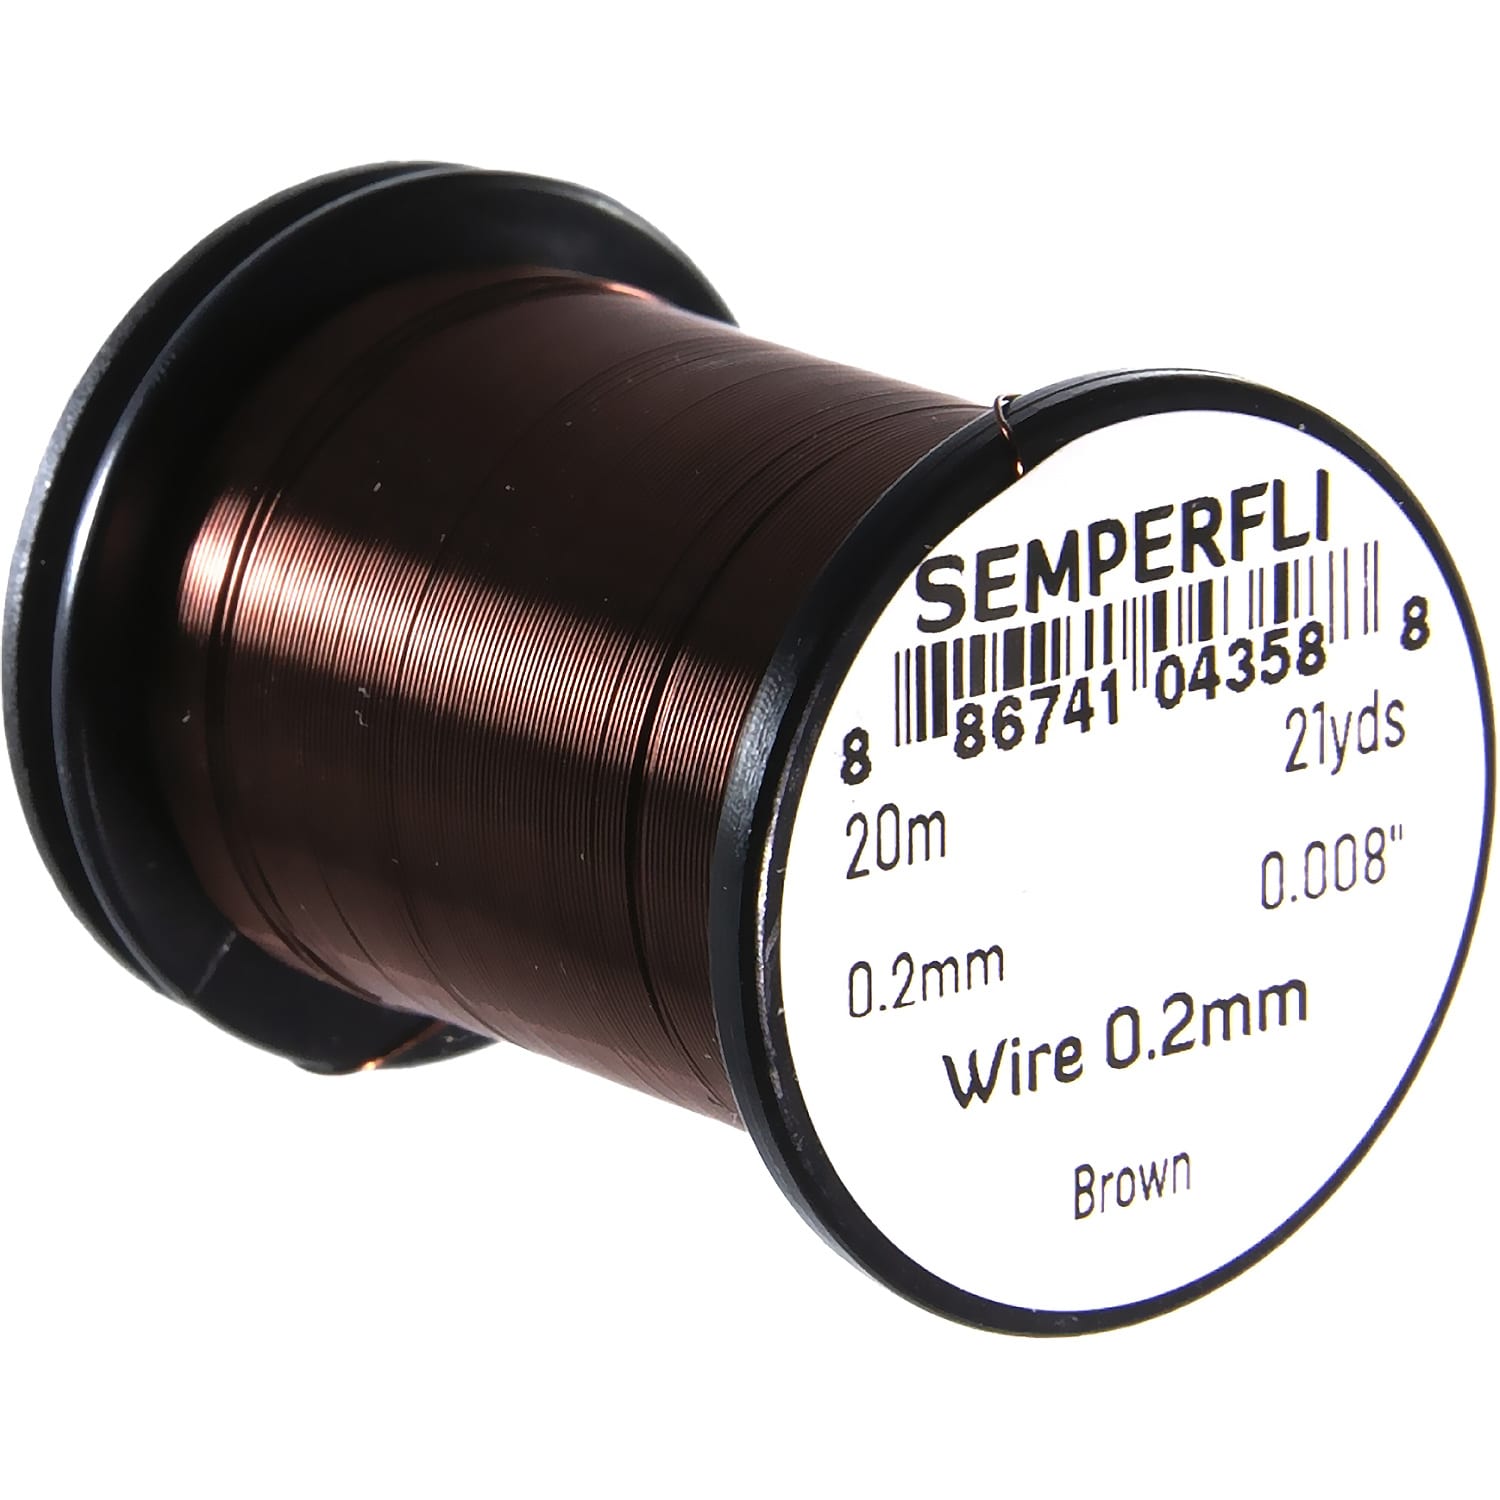 Semperfli Lure/Streamer 0.2mm Wire